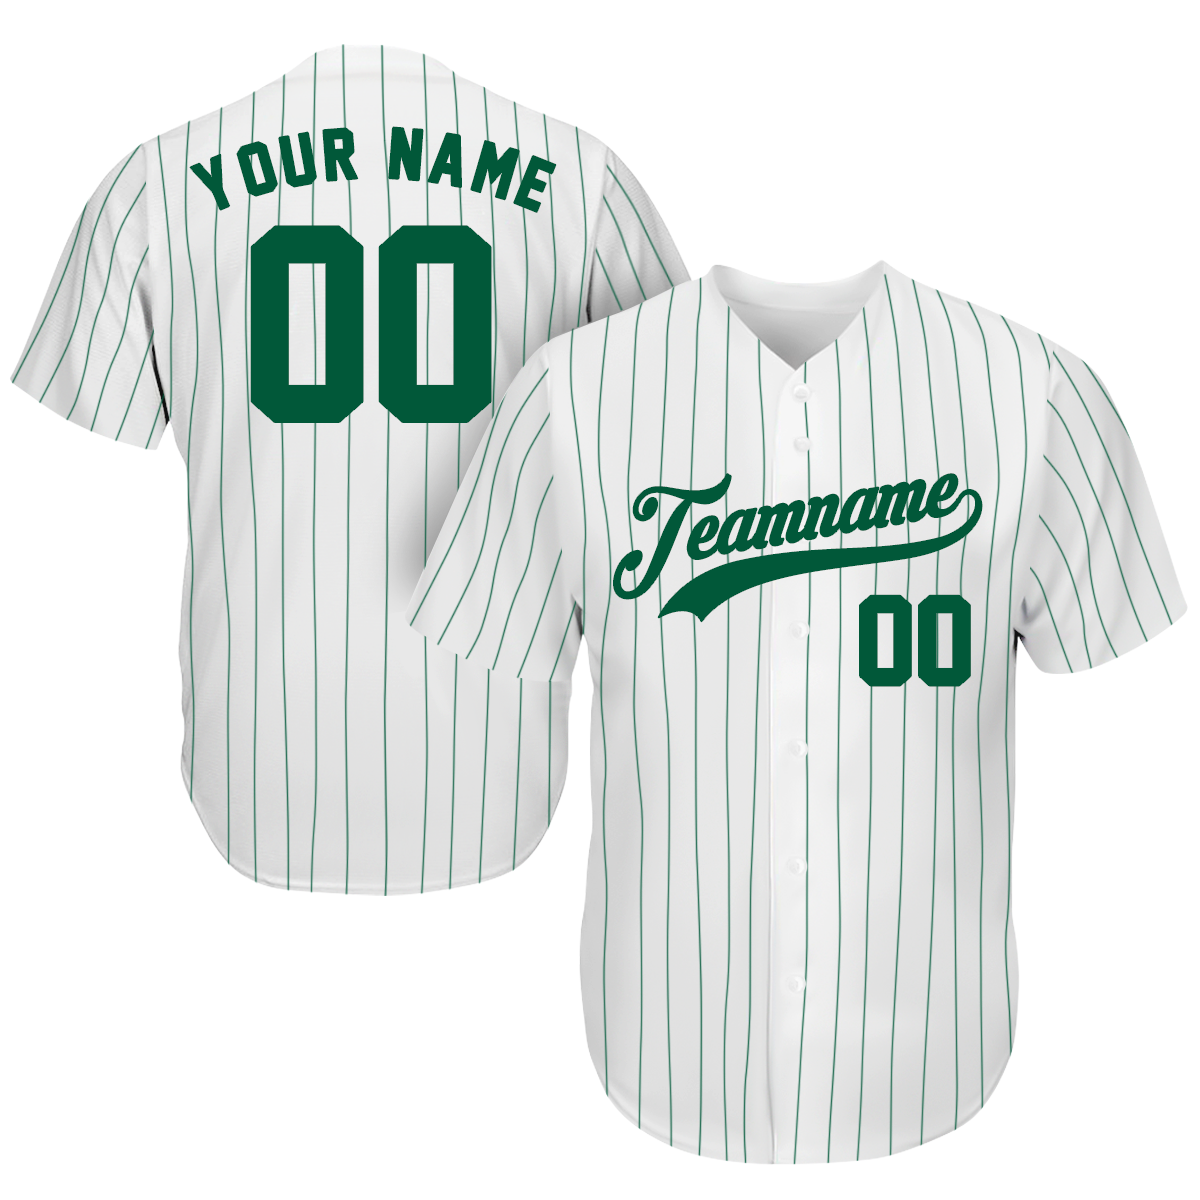 Custom Baseball Jerseys - Baseball Fan Gift - Pinstripe White Green - St. Patrick's Day Baseball Outfit